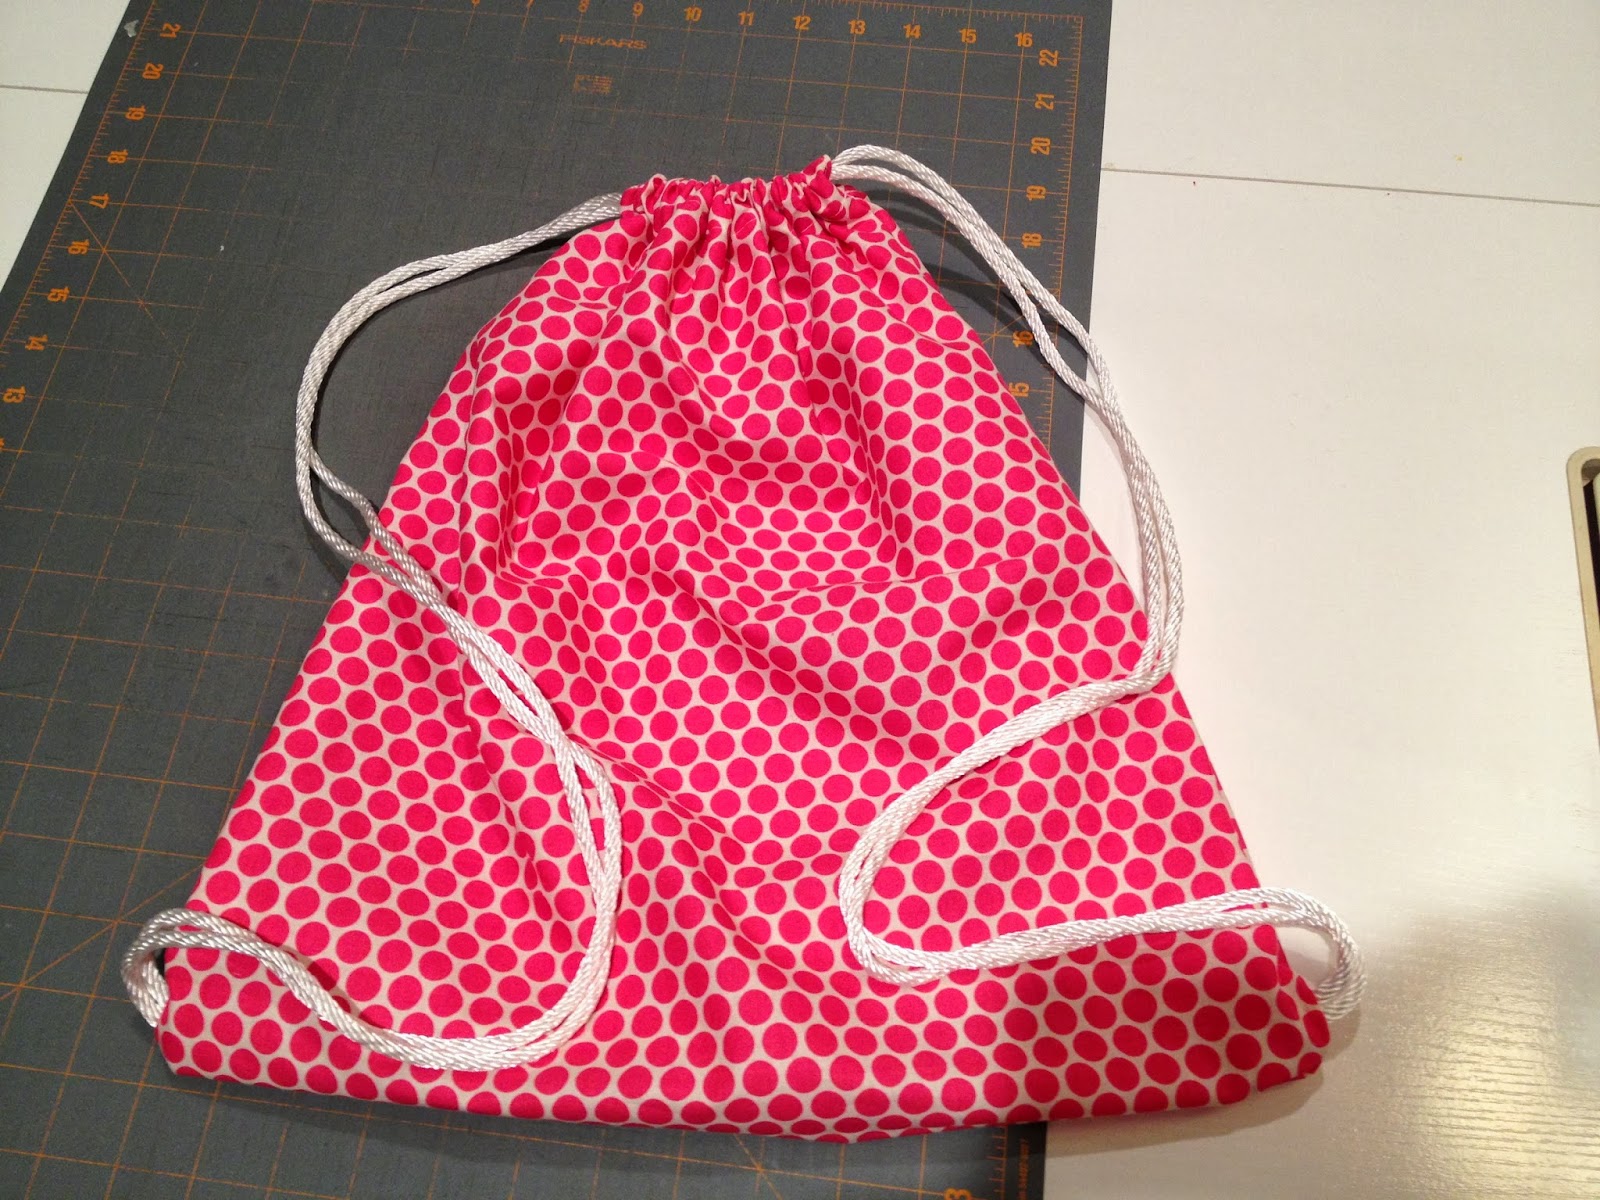 DIY Drawstring Backpack  How to Make a Drawstring Backpack